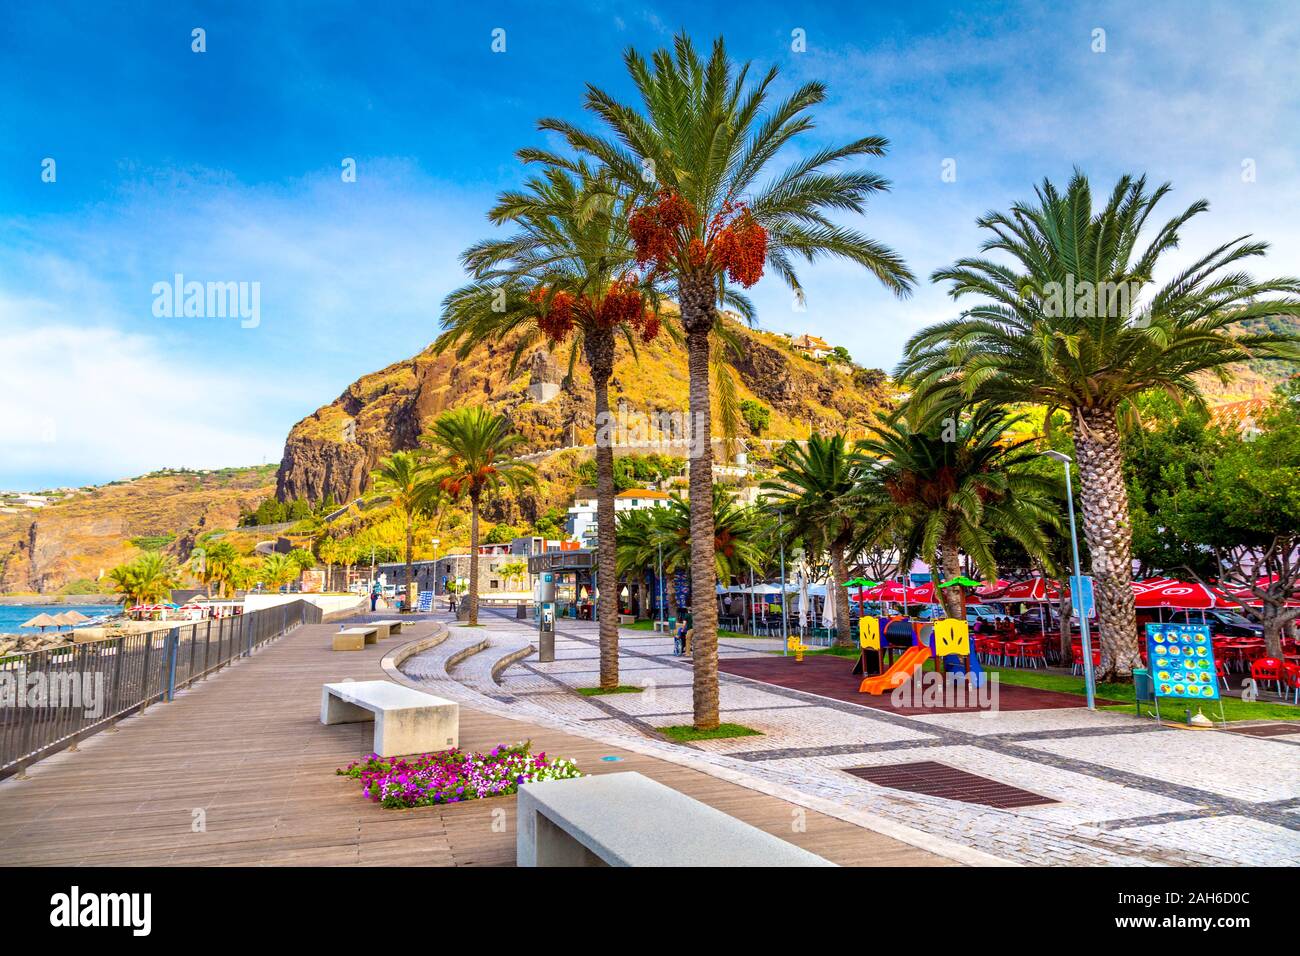 Palm trees and seaside promenade in Riberia Brava, Madeira, Portugal Stock Photo